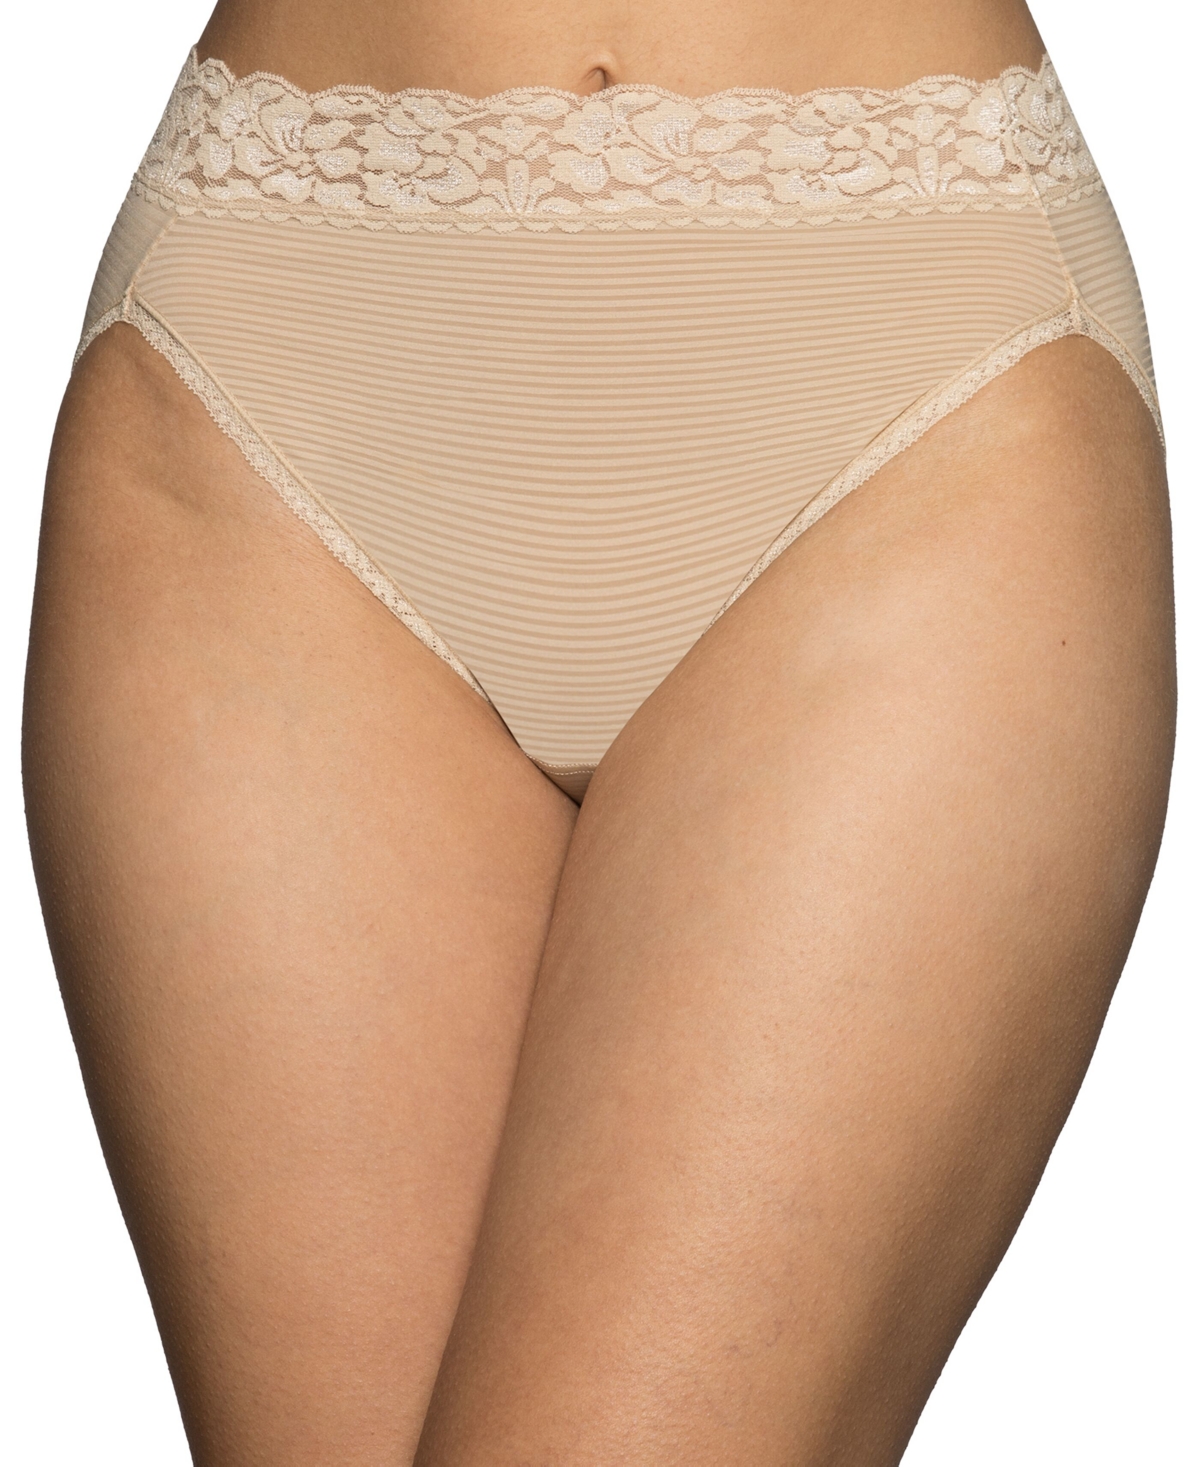 Women's Flattering Lace Hi-Cut Panty Underwear 13280, extended sizes available - Centennial Leopard Print